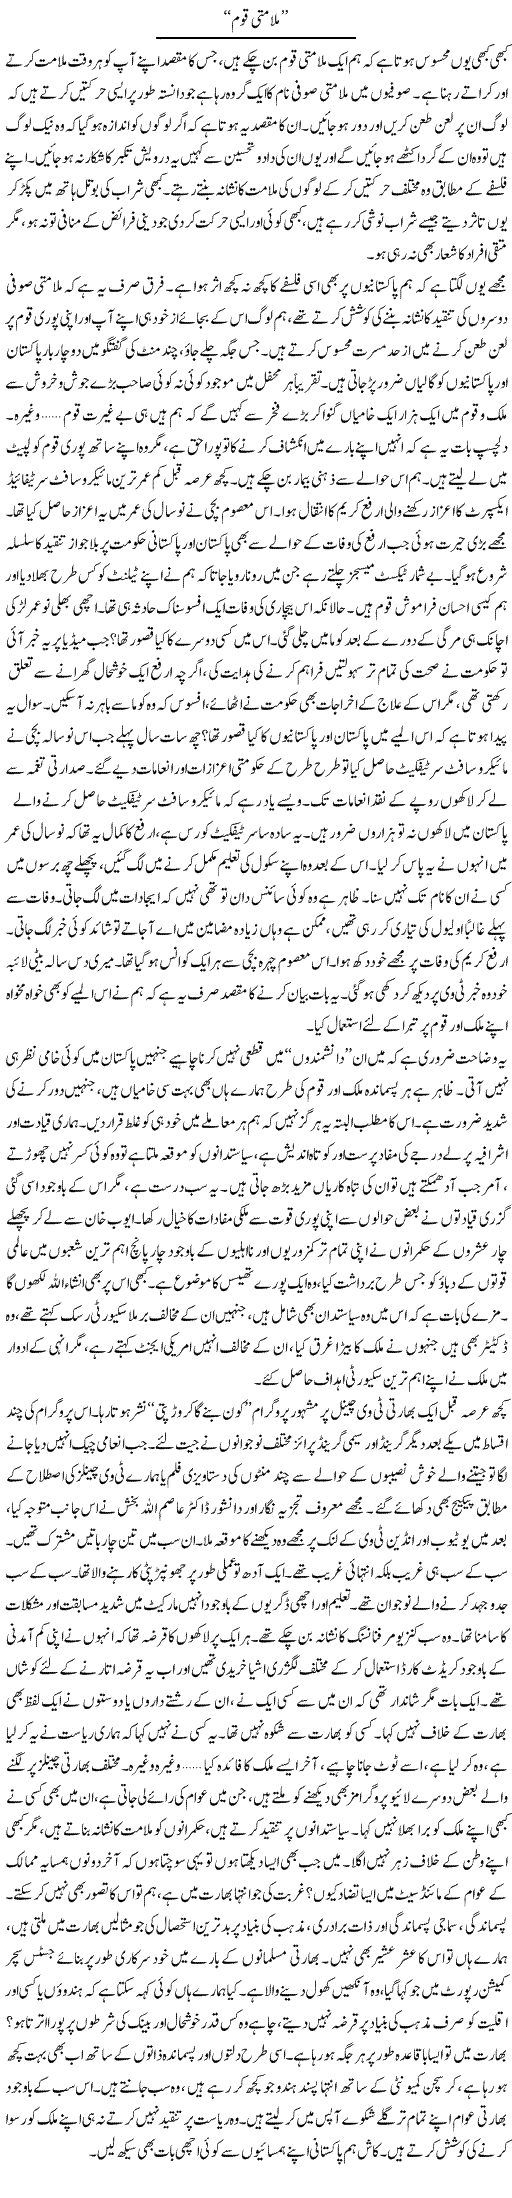 Situation of Pakistani Nation - Urdu Column